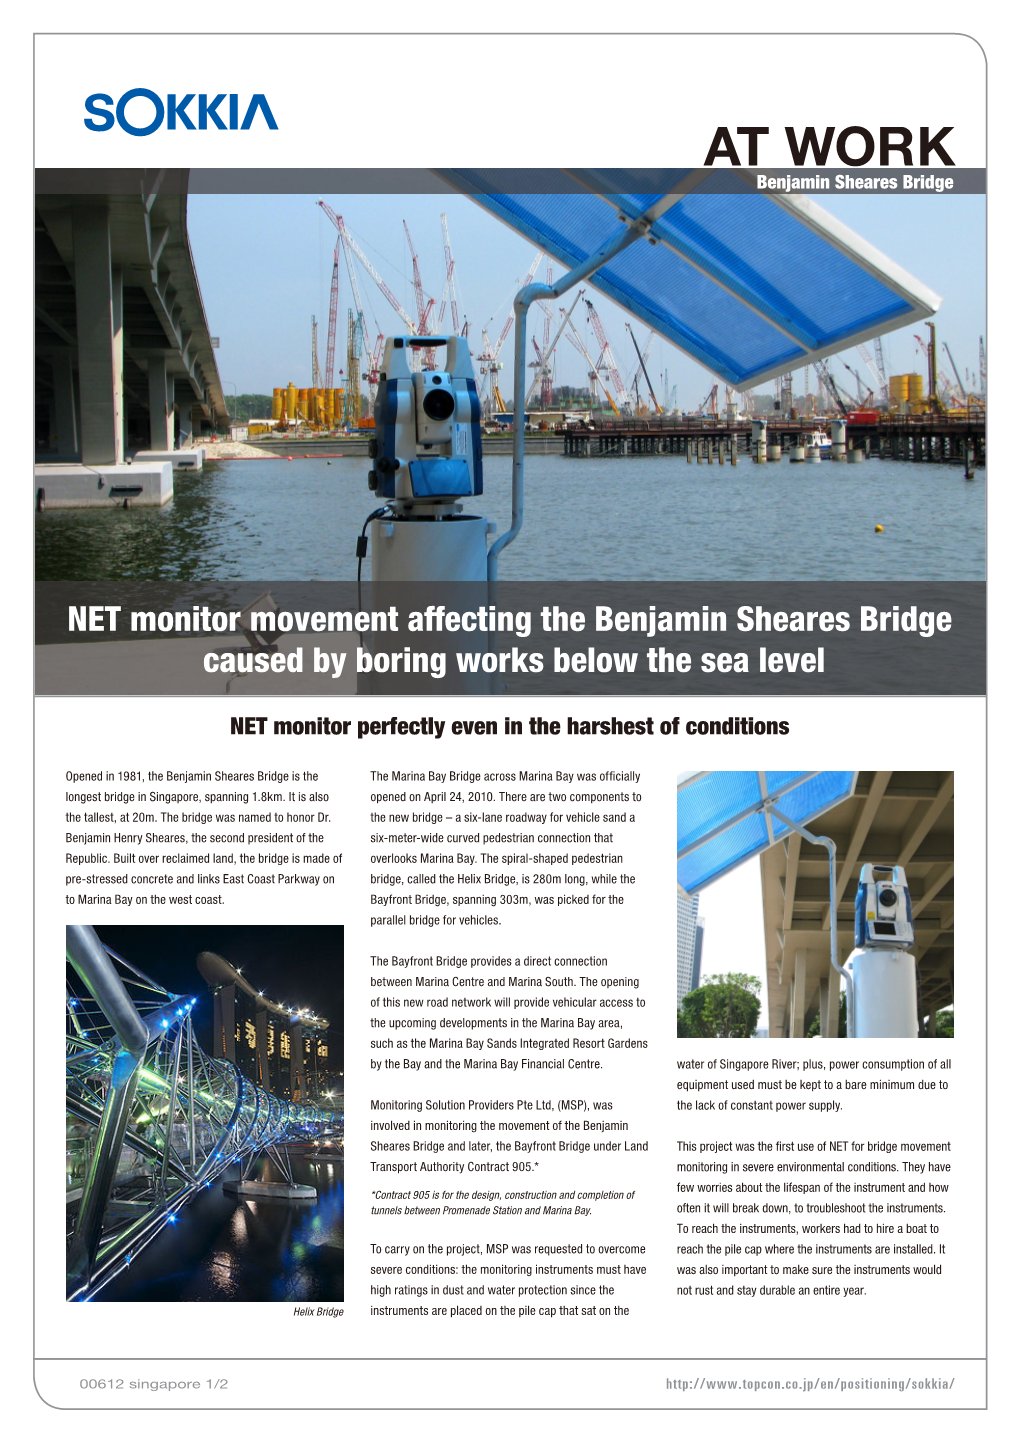 The Benjamin Sheares Bridge Caused by Boring Works Below the Sea Level